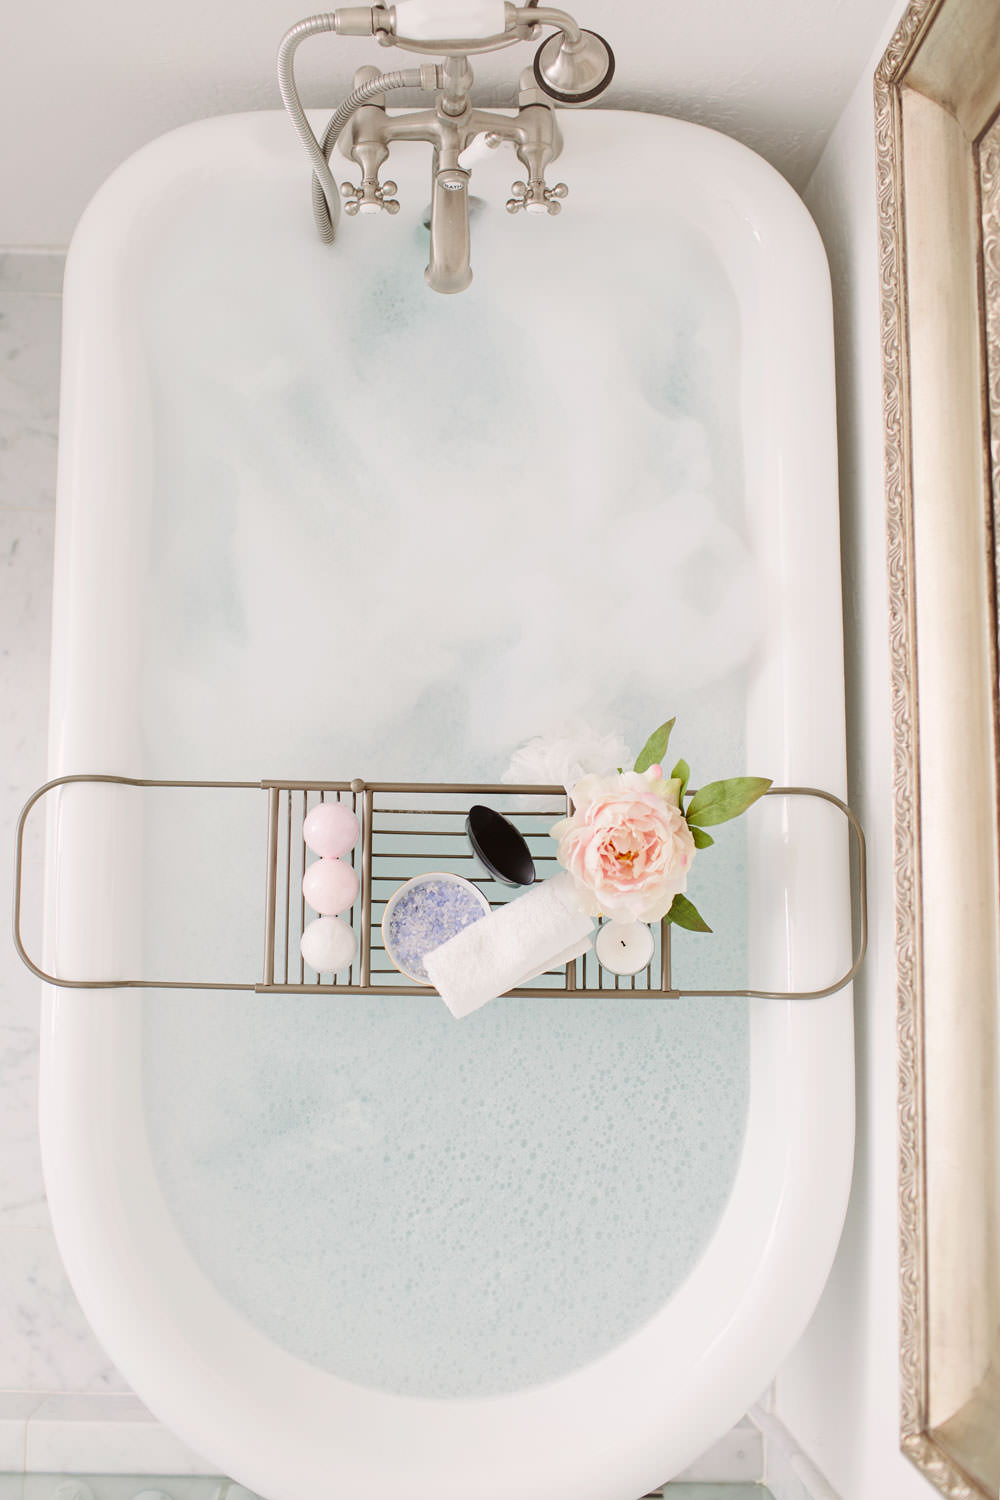 Caress fine fragrances lavender scented body wash in the bath with a bathtub caddy